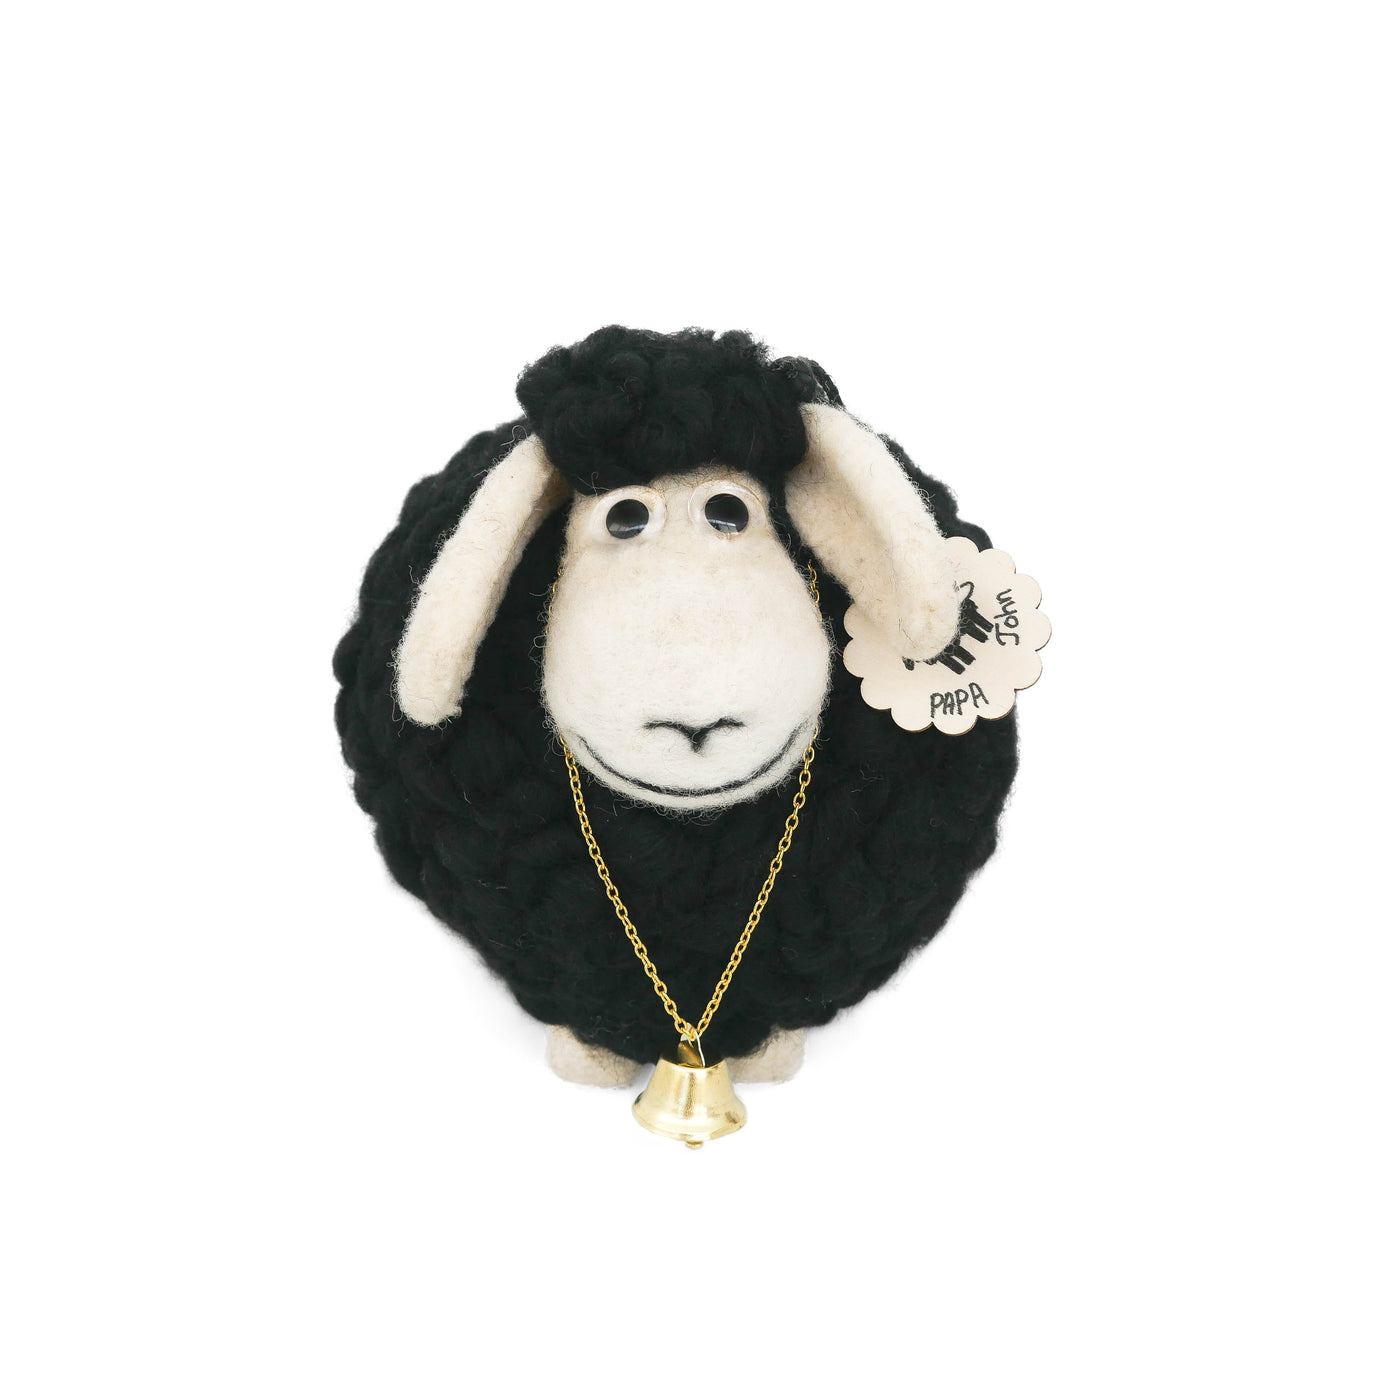 Decorative Handmade Wool Sheep - Papa John